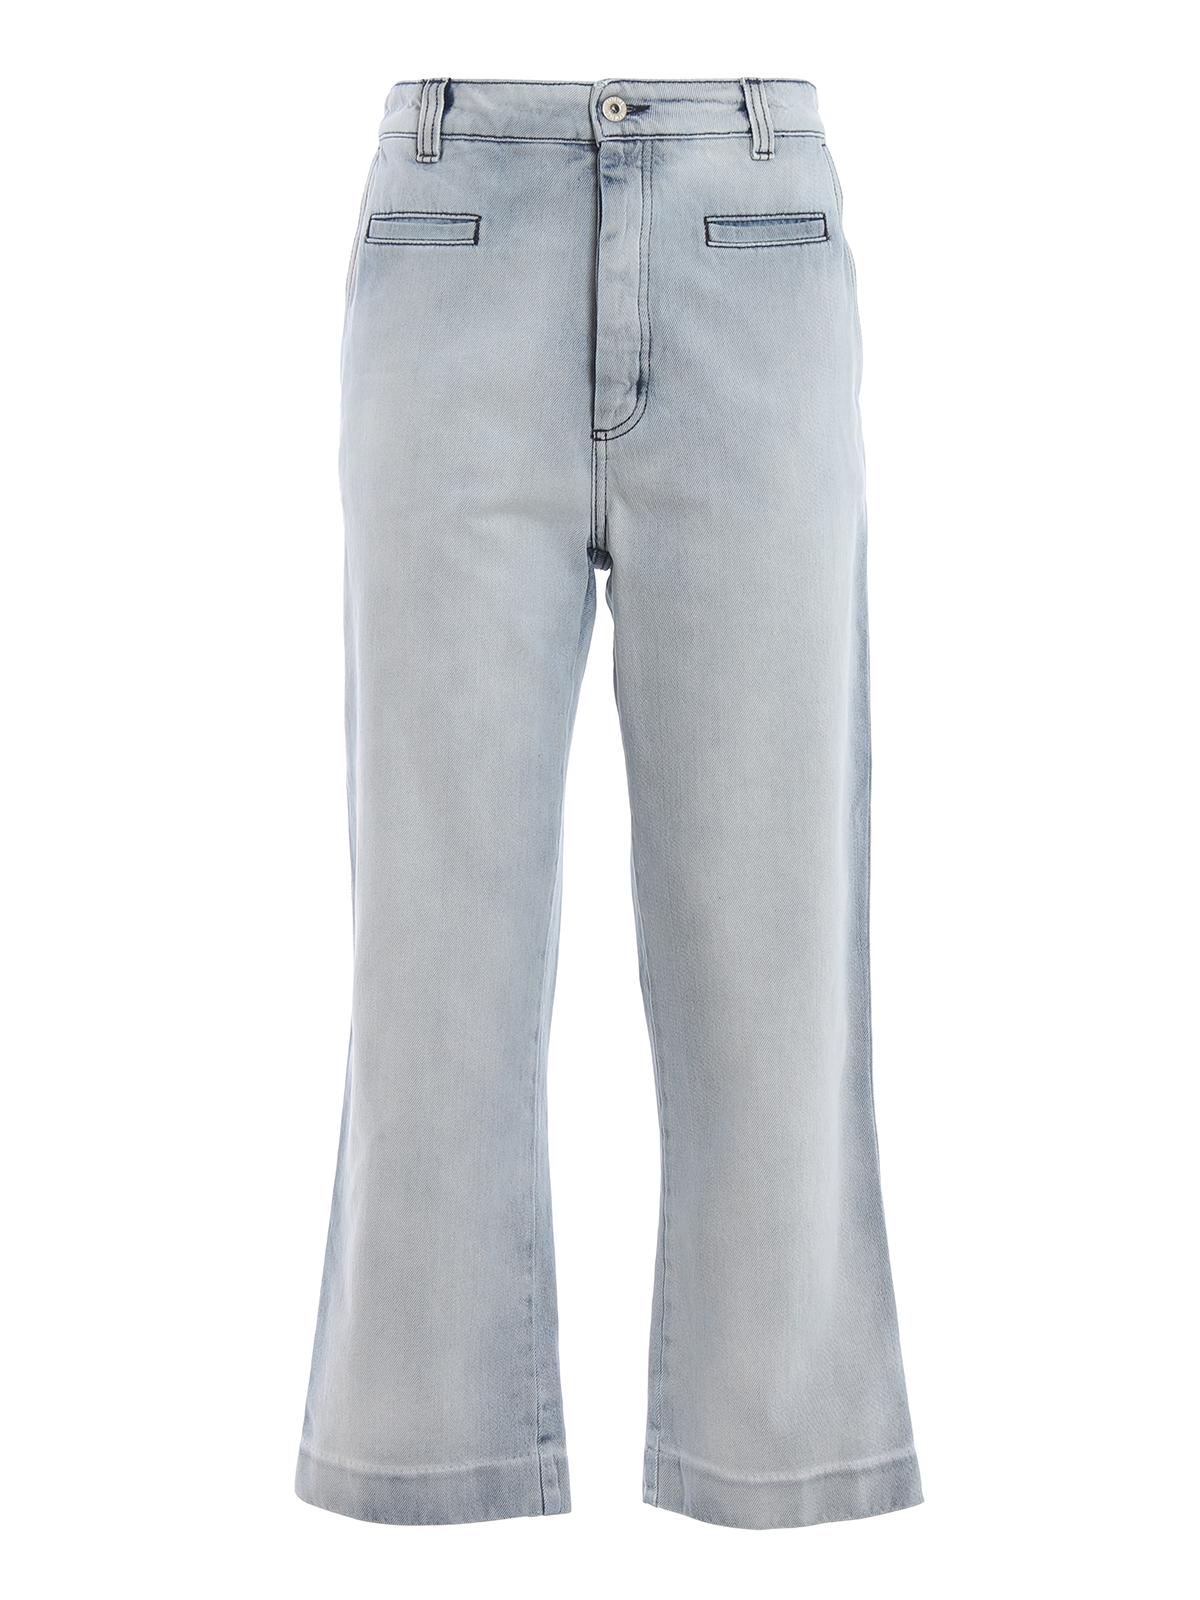 Loewe Denim Light Wash Wide Leg Cropped Jeans - Lyst